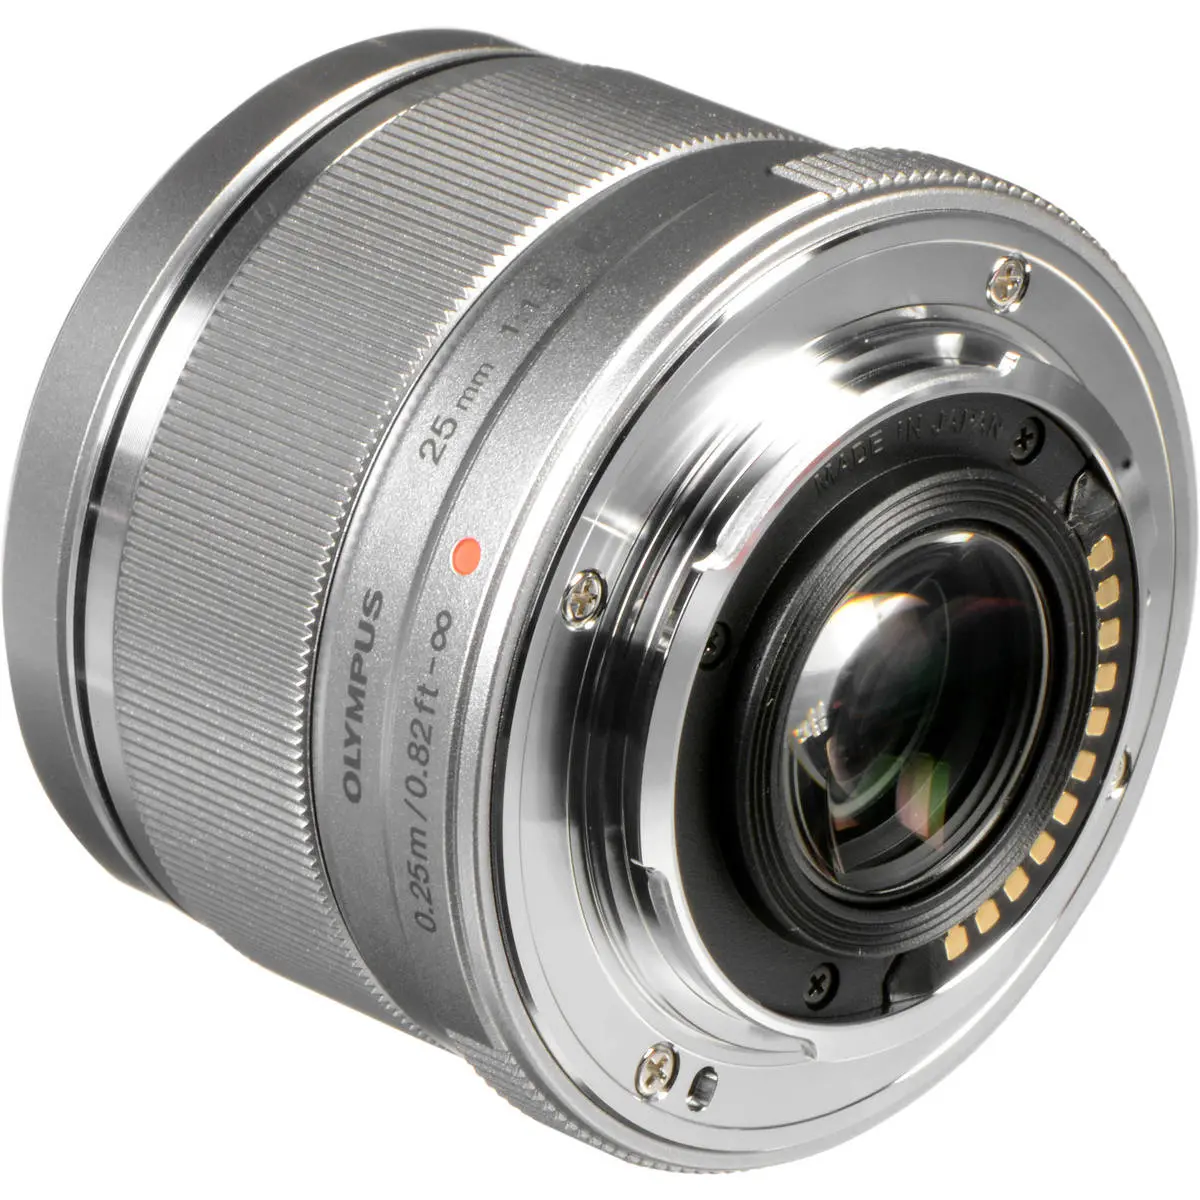 3. Olympus M.ZUIKO DIGITAL 25mm F1.8 (Silver) Lens